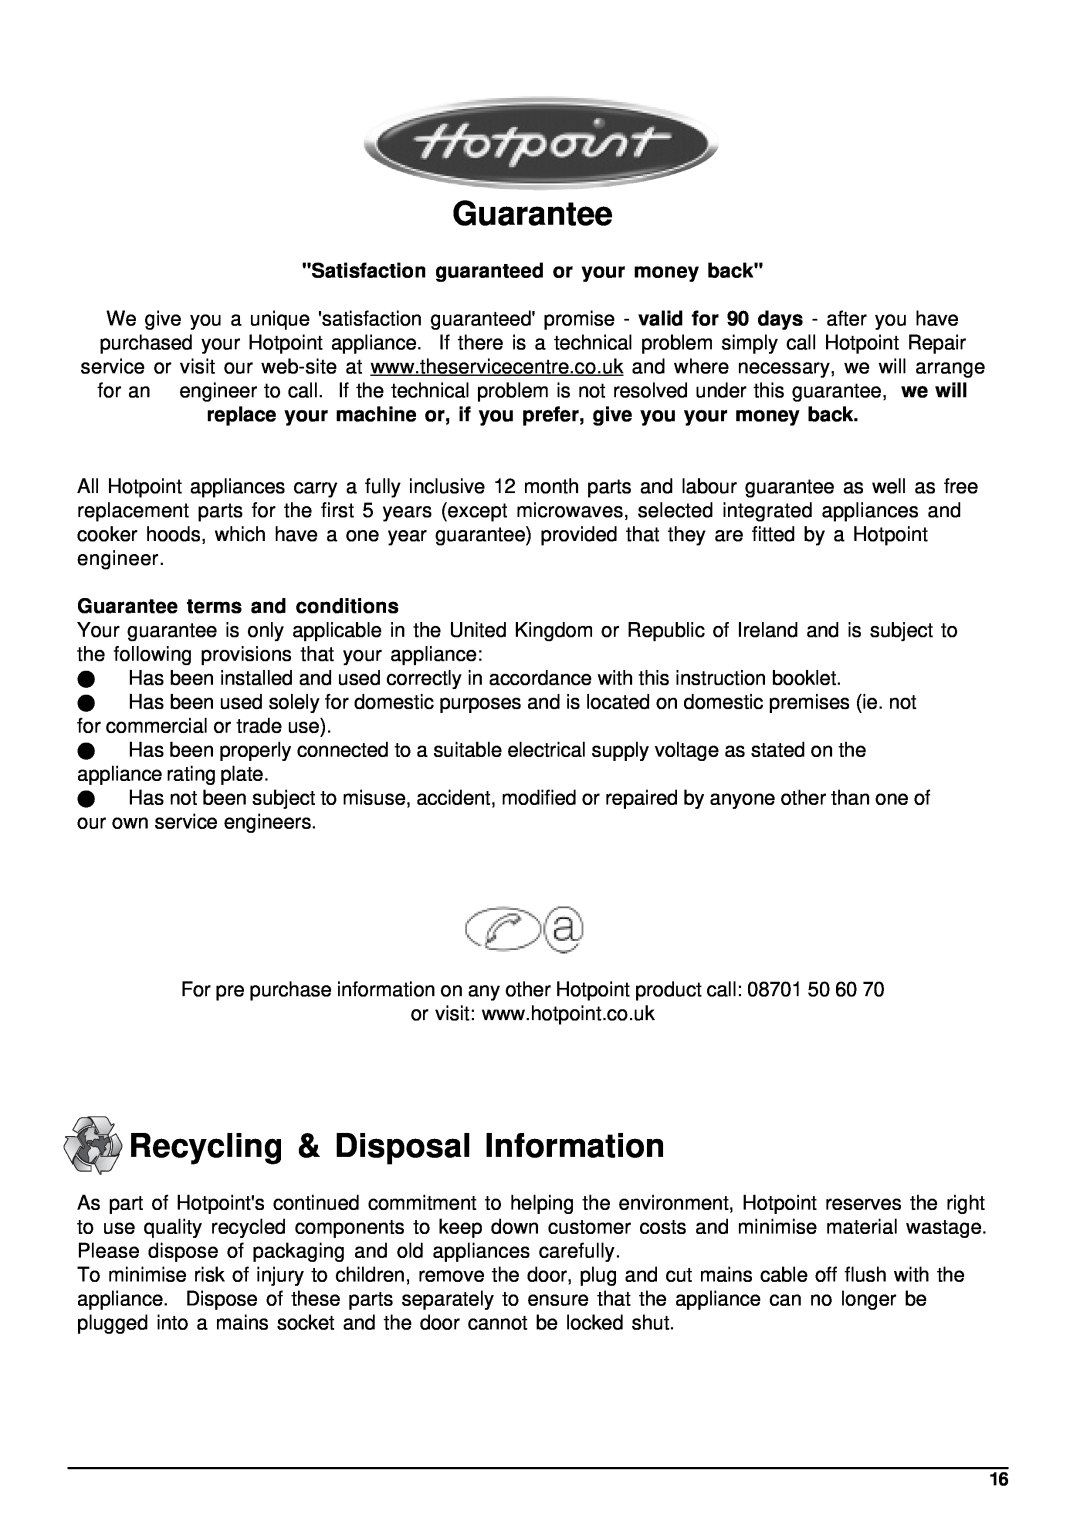 Hotpoint BCI45 manual Guarantee, Recycling & Disposal Information, Satisfaction guaranteed or your money back 